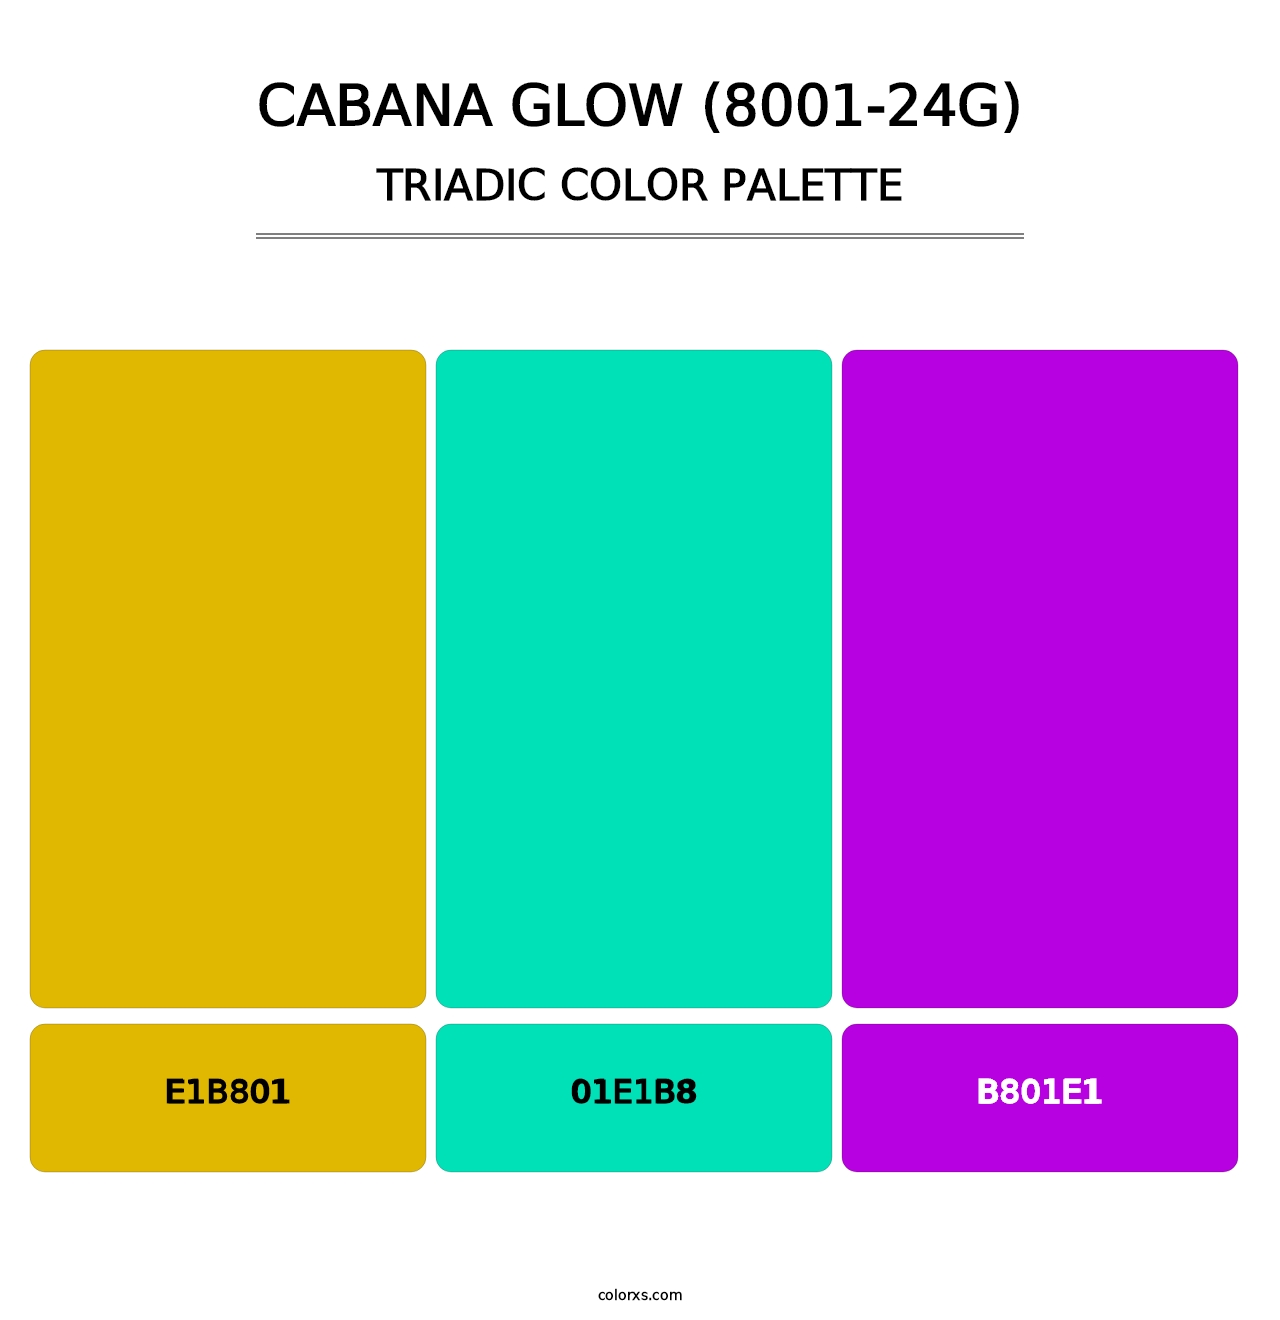 Cabana Glow (8001-24G) - Triadic Color Palette